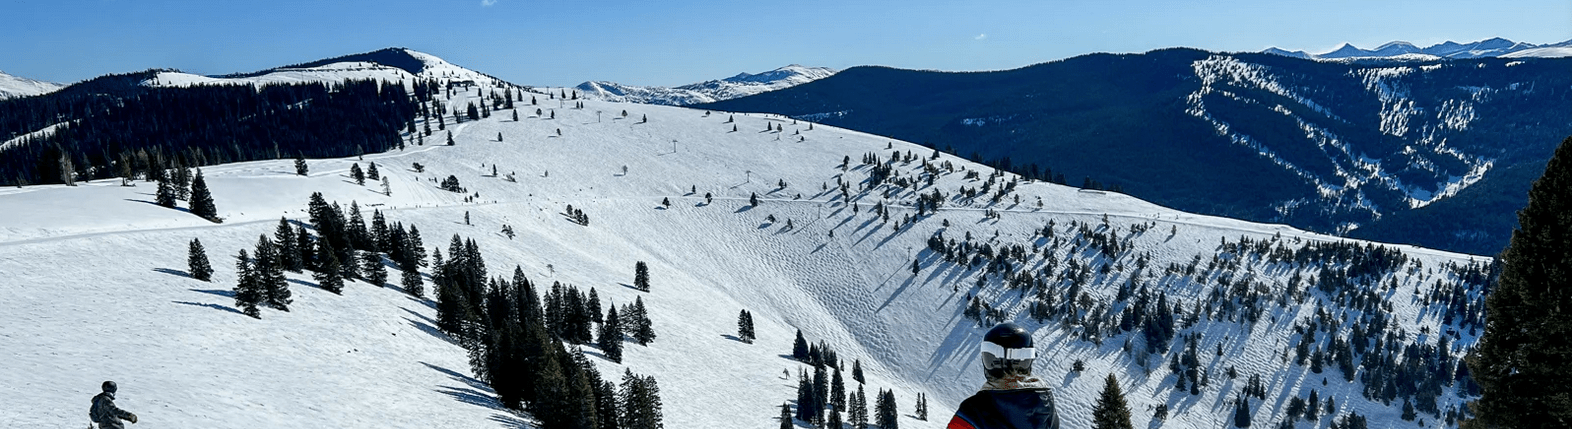 Bluebird bowl skiing in Colorado. 